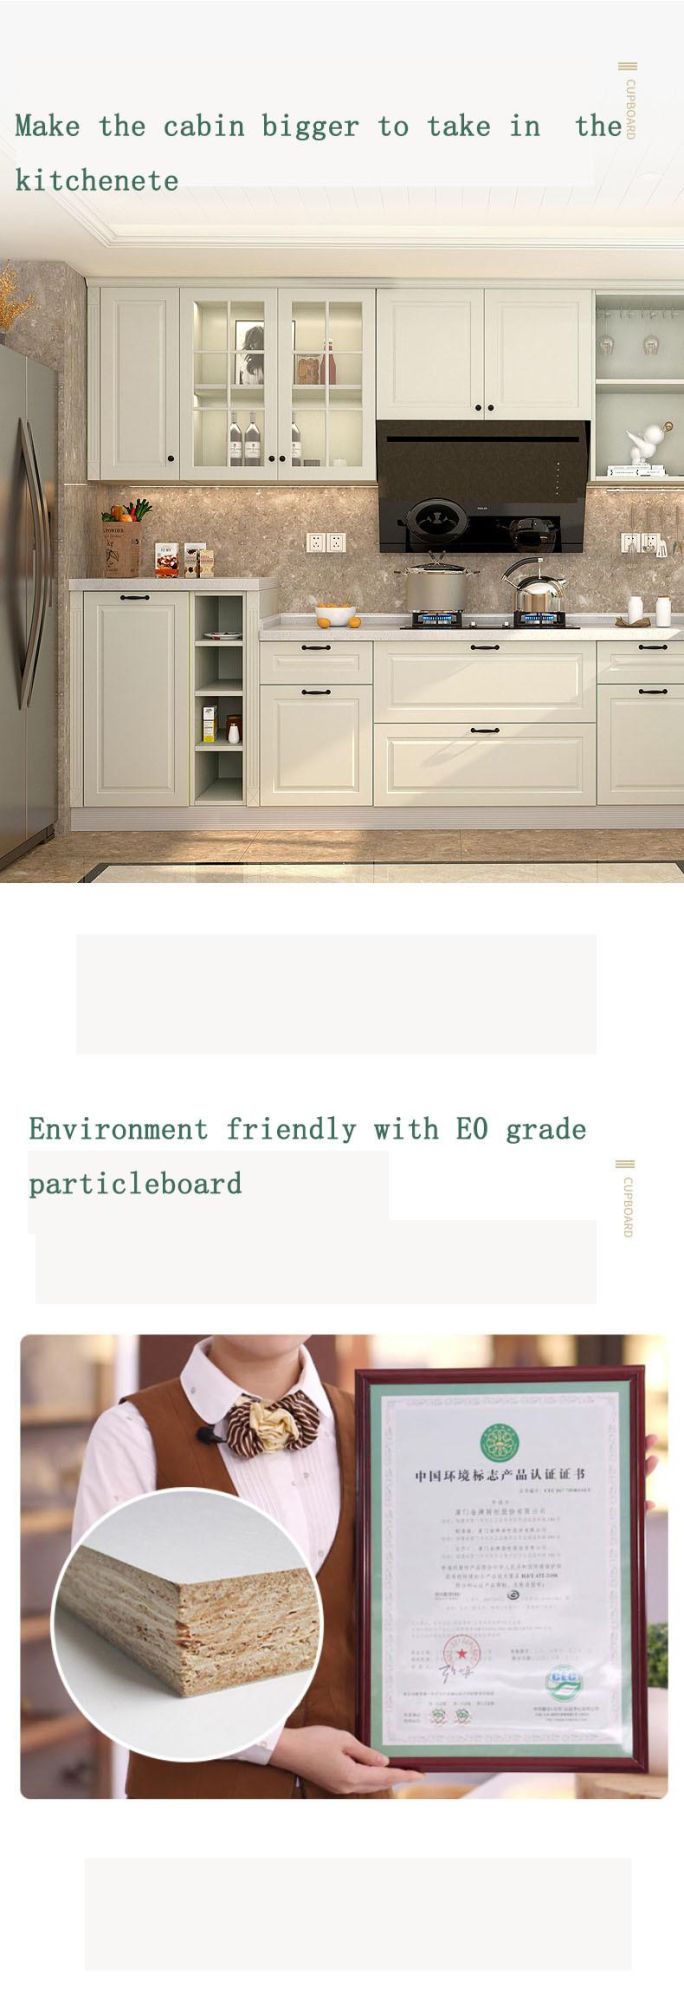 Modern Minimalistic Style Small House Kitchen #Cabinet European Amazonsfurniture-S002